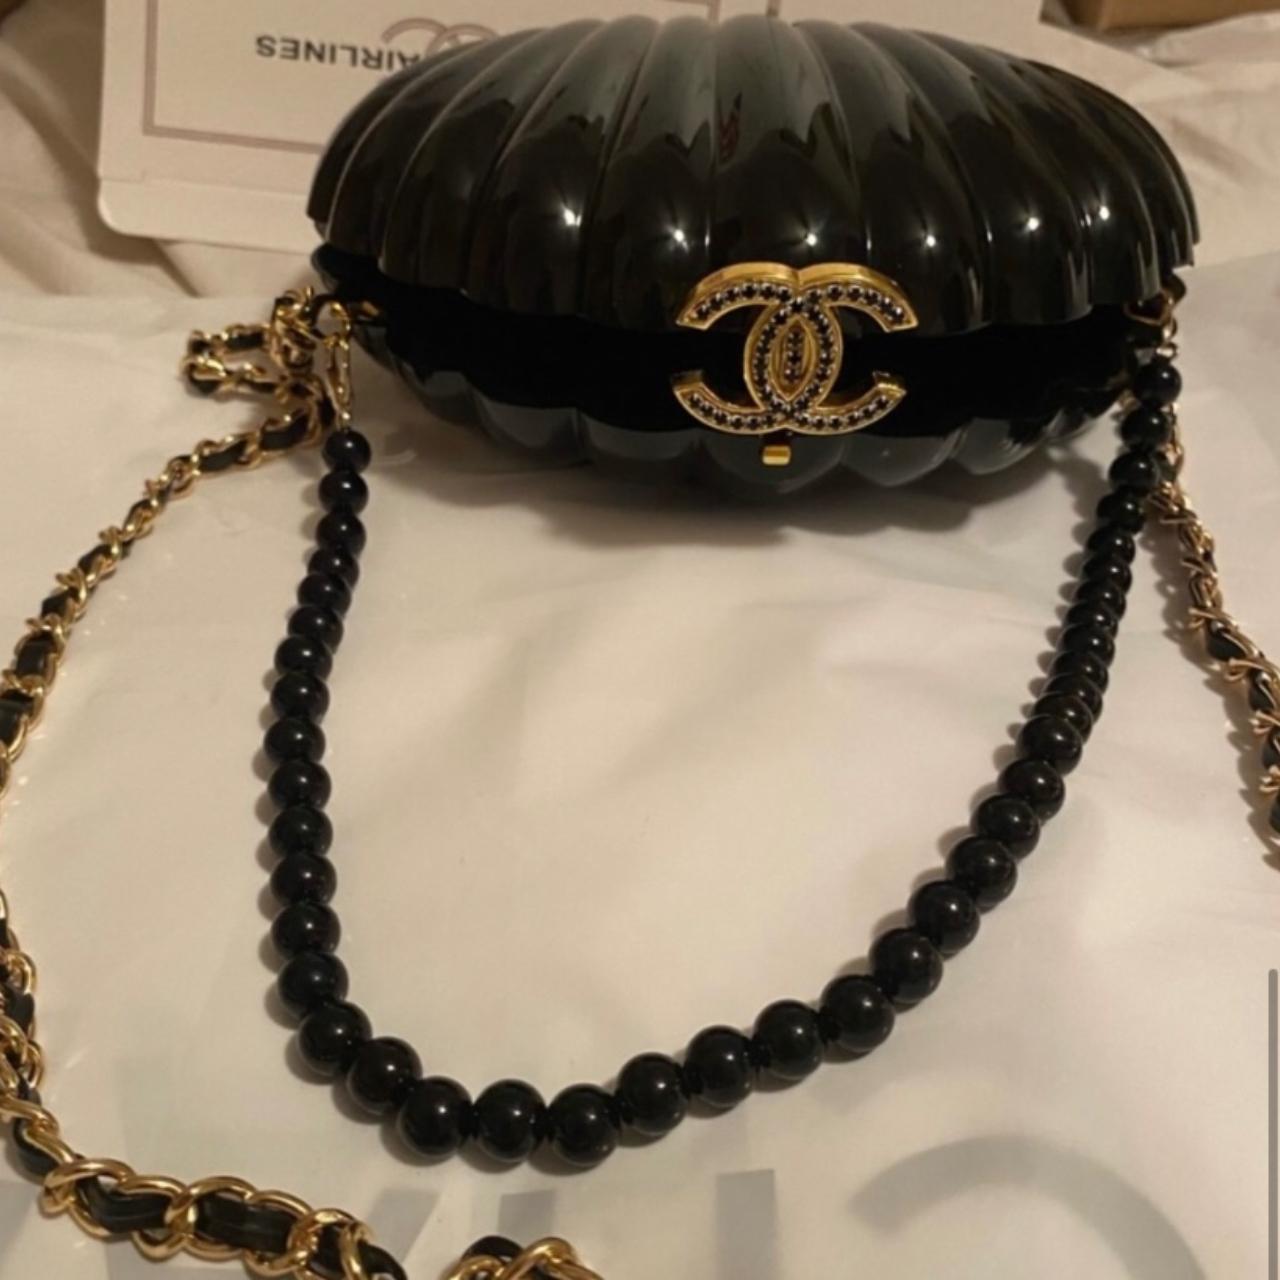 Chanel VIP gift bag / gift for Chanel VIP buyers - Depop